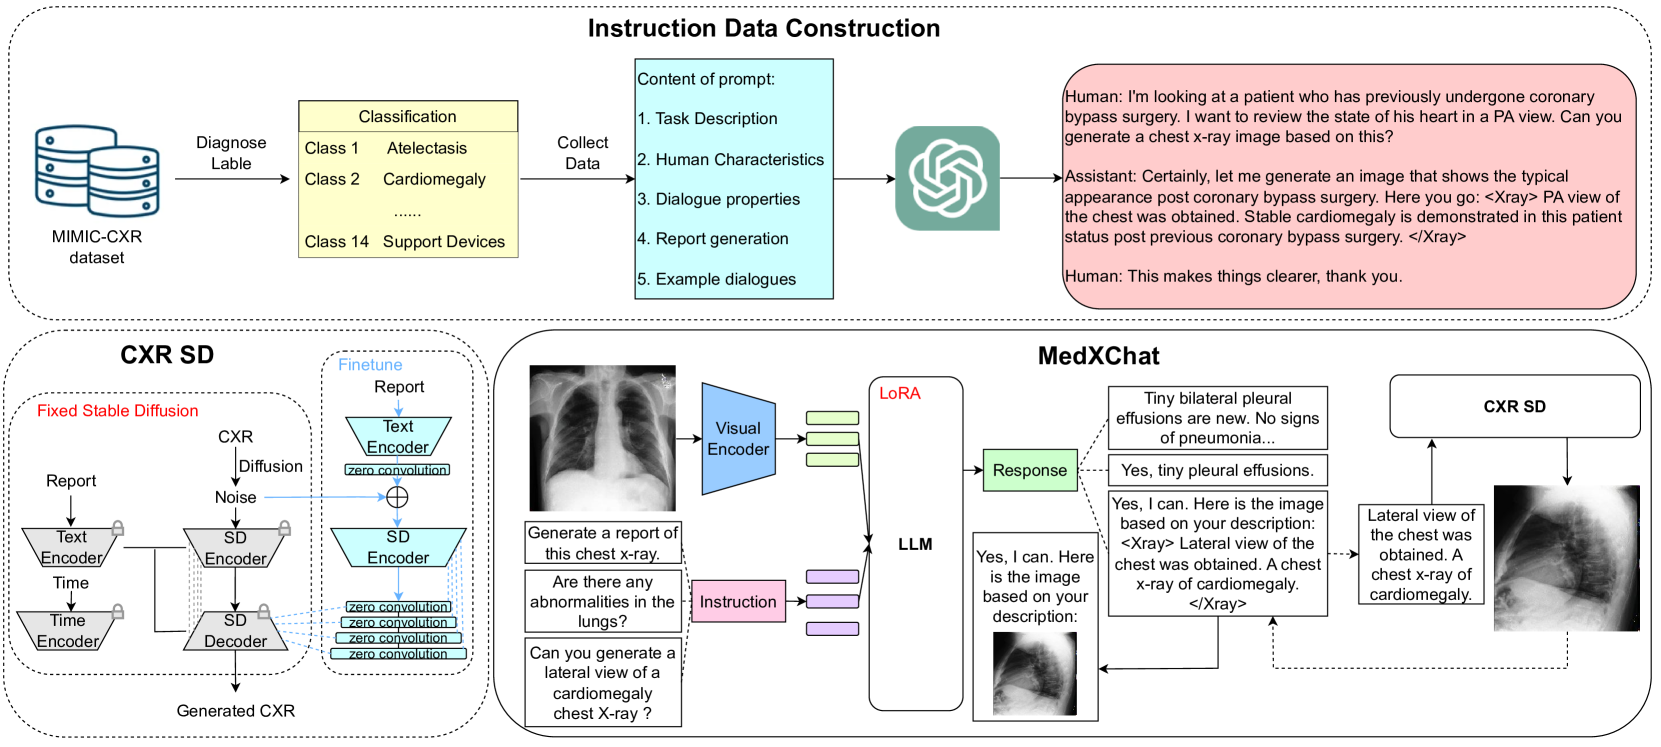 MedXChat: A Unified Multimodal Large Language Model Framework towards CXRs Understanding and Generation